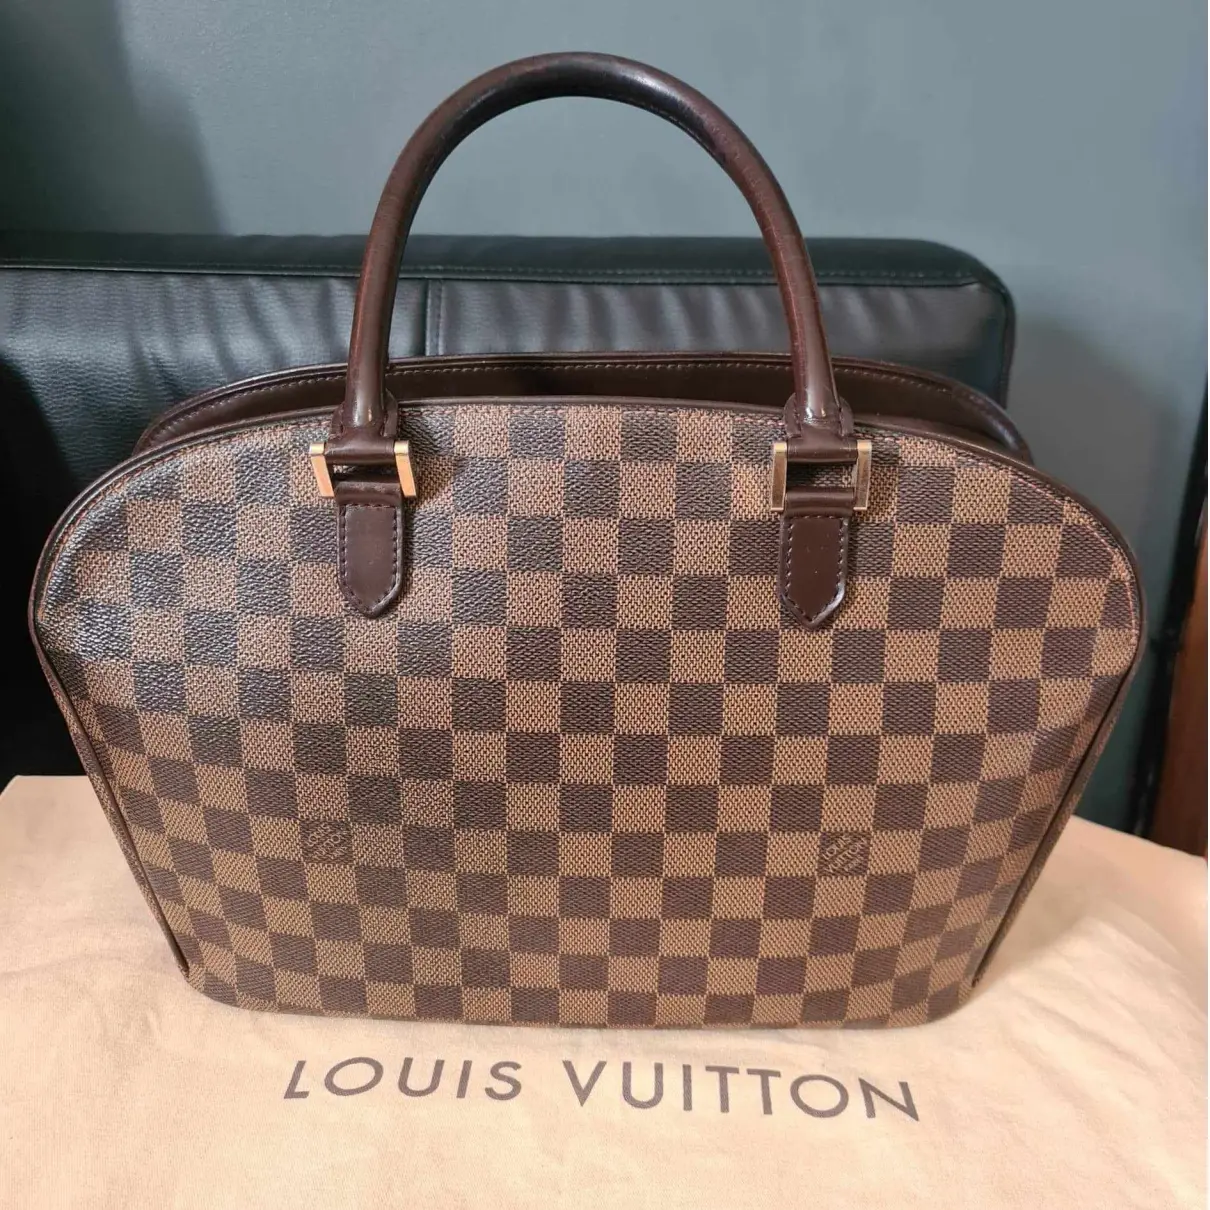 Buy Louis Vuitton Sarria leather satchel online